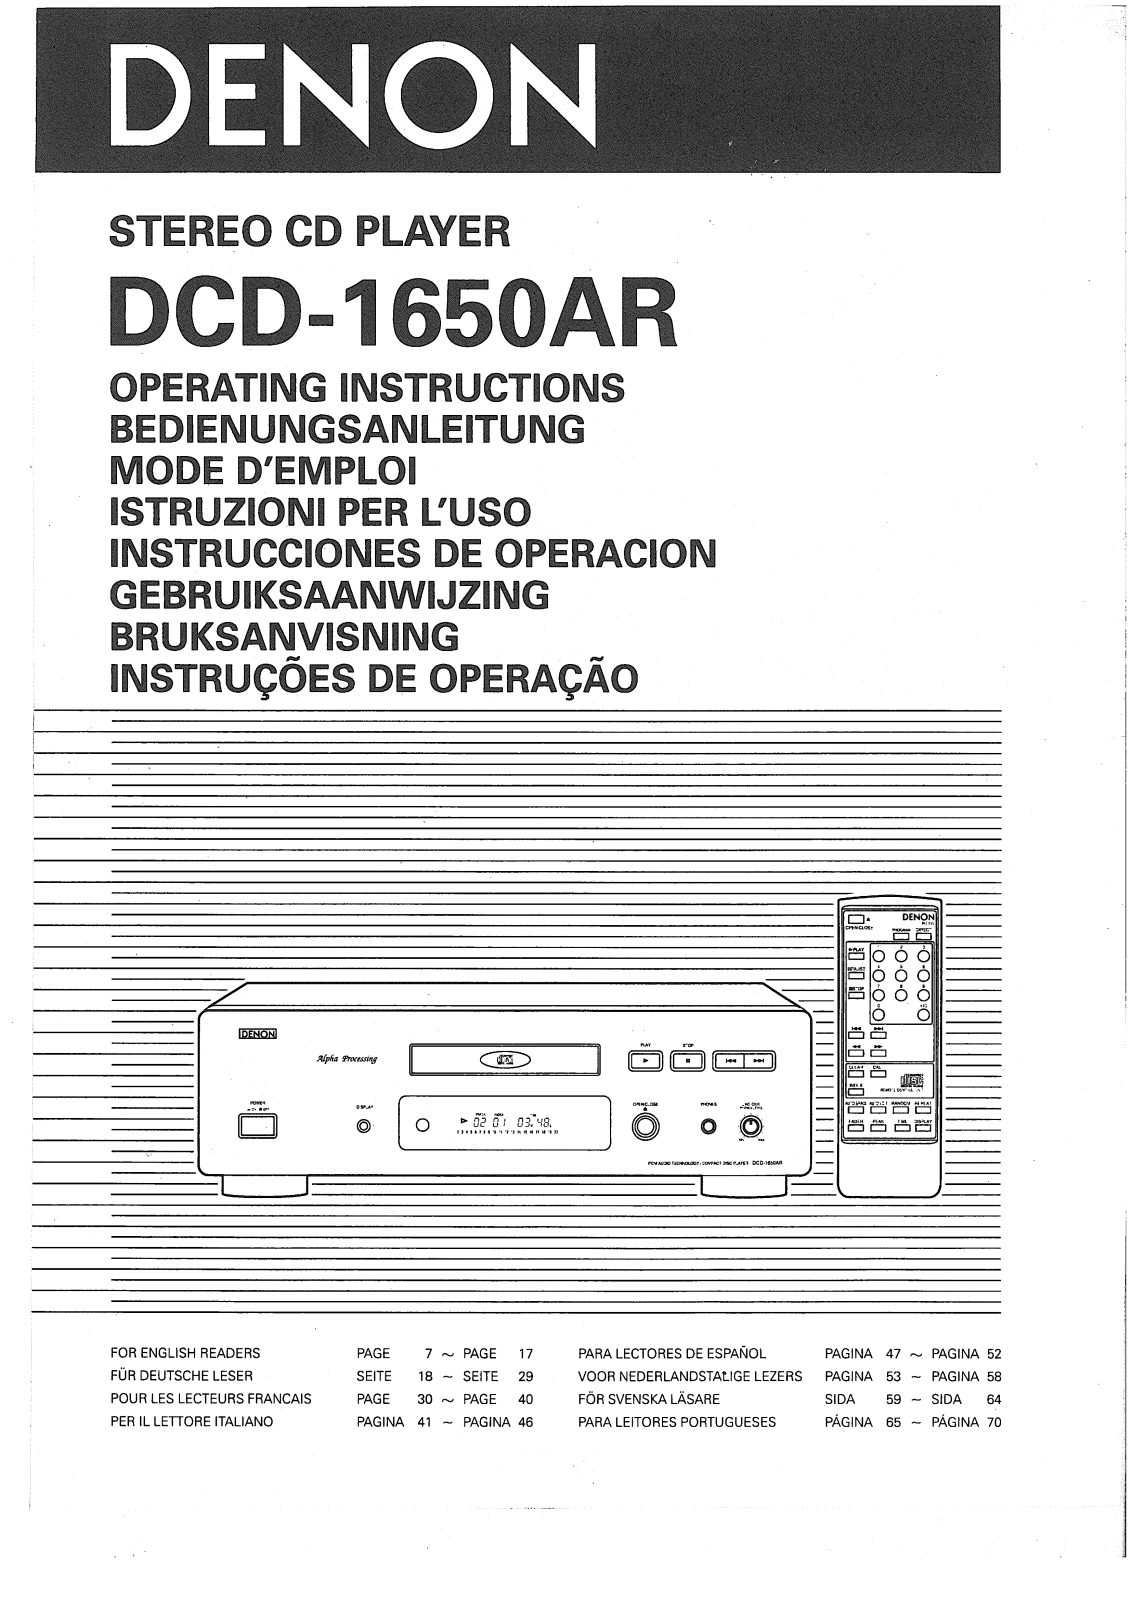 Denon DCD-1650AR OPERATING INSTRUCTIONS